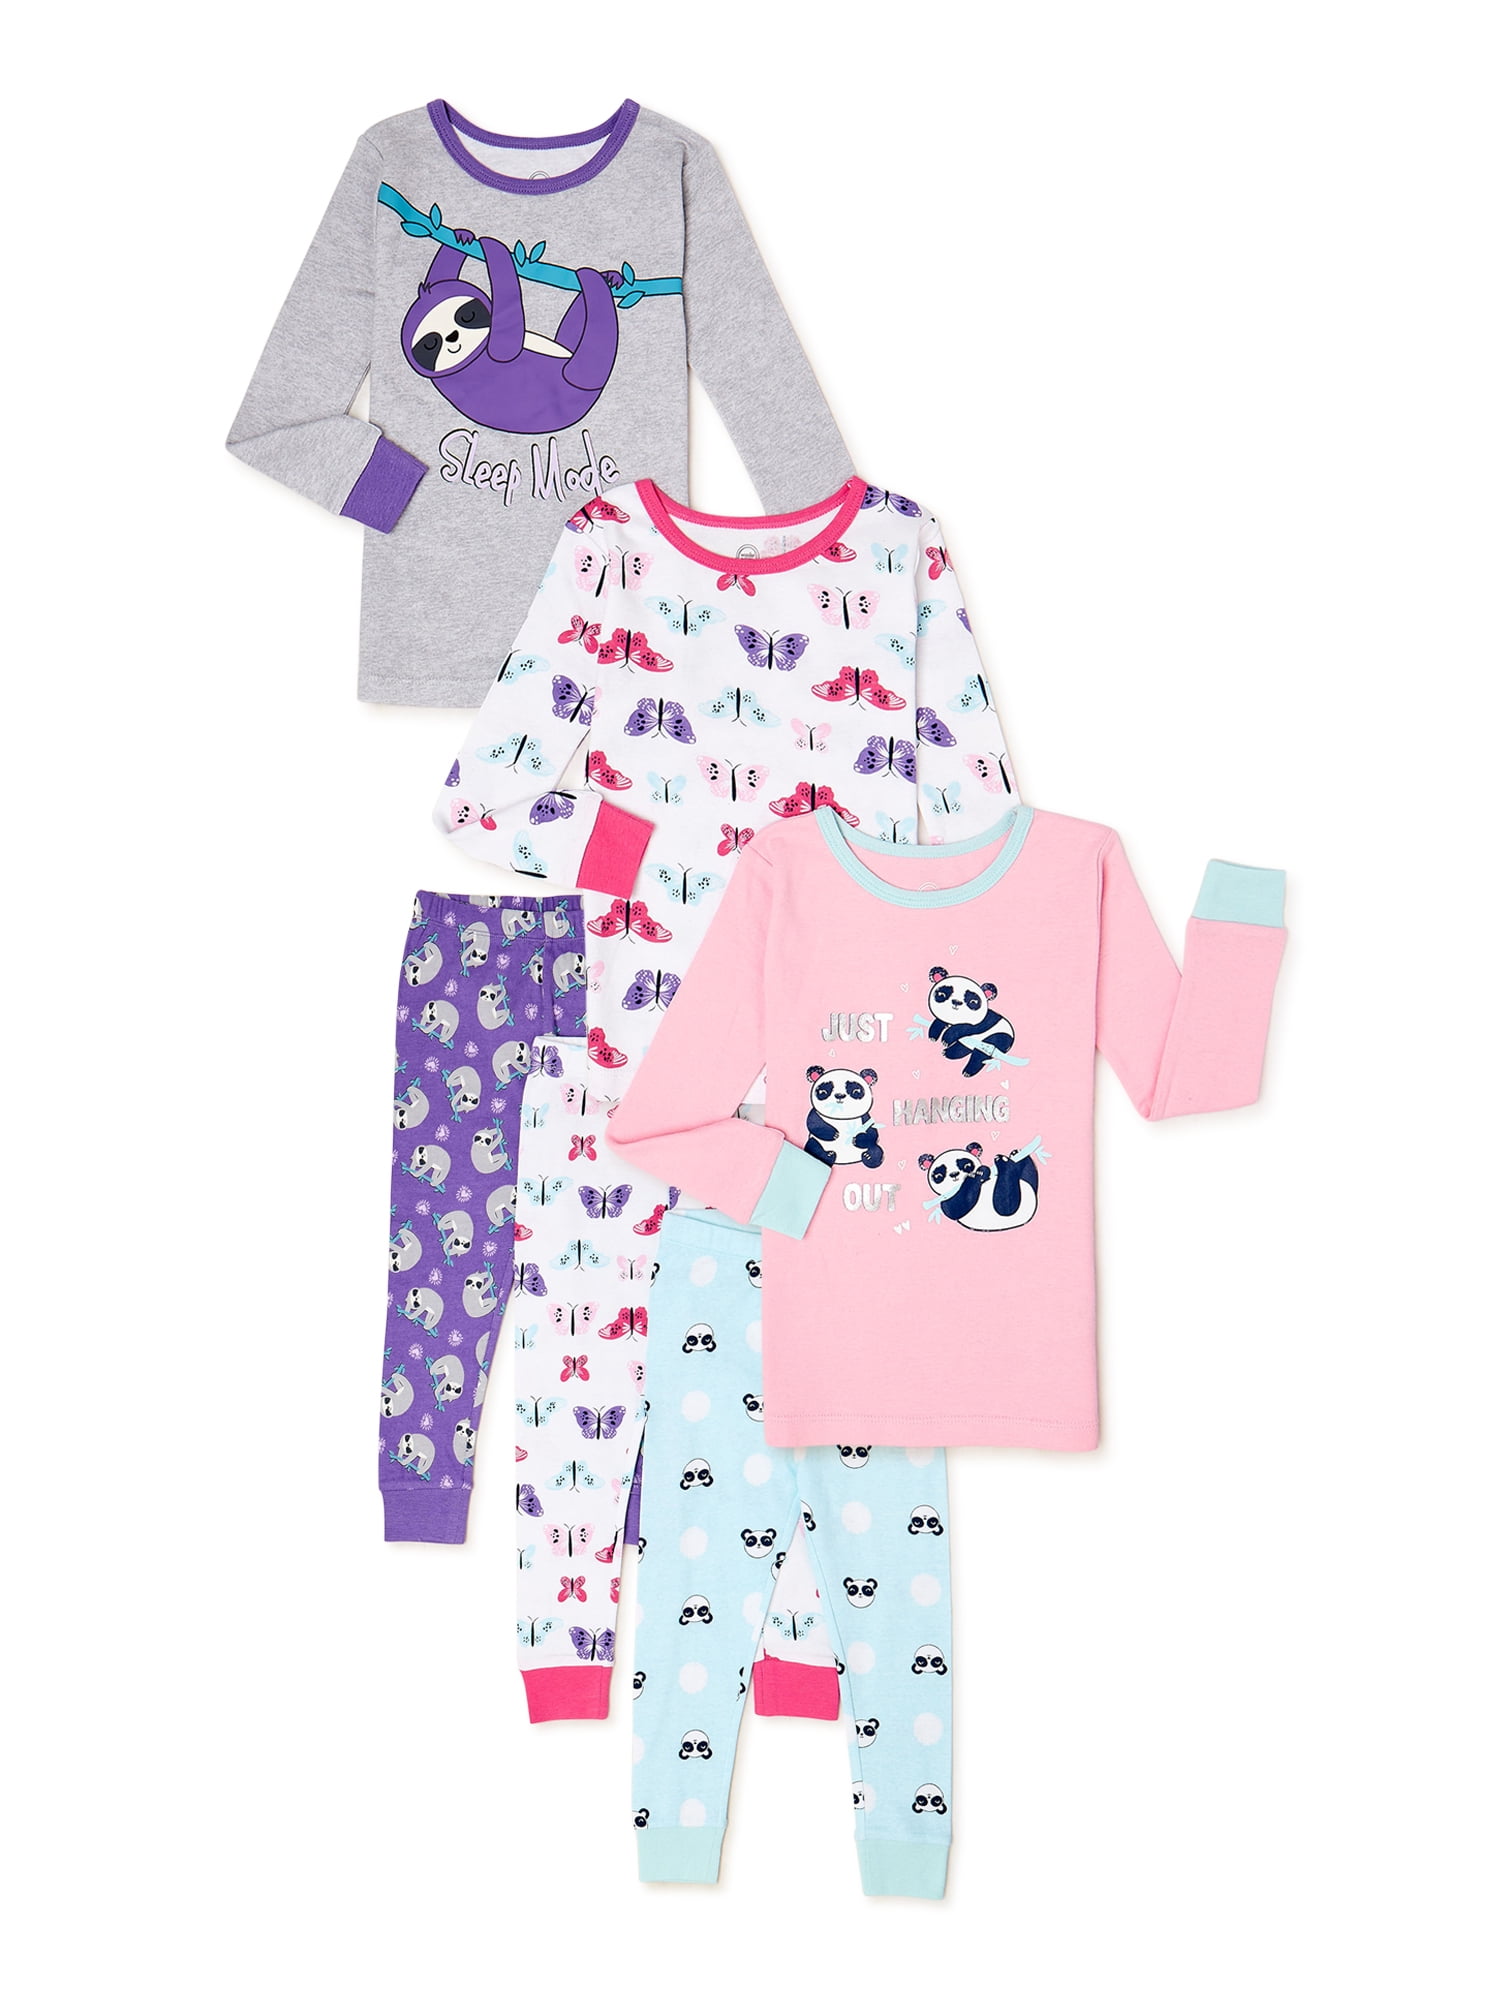 Girls Pajamas Long Sleeve Snug-Fit Cotton Pjs Set Sleepwear 